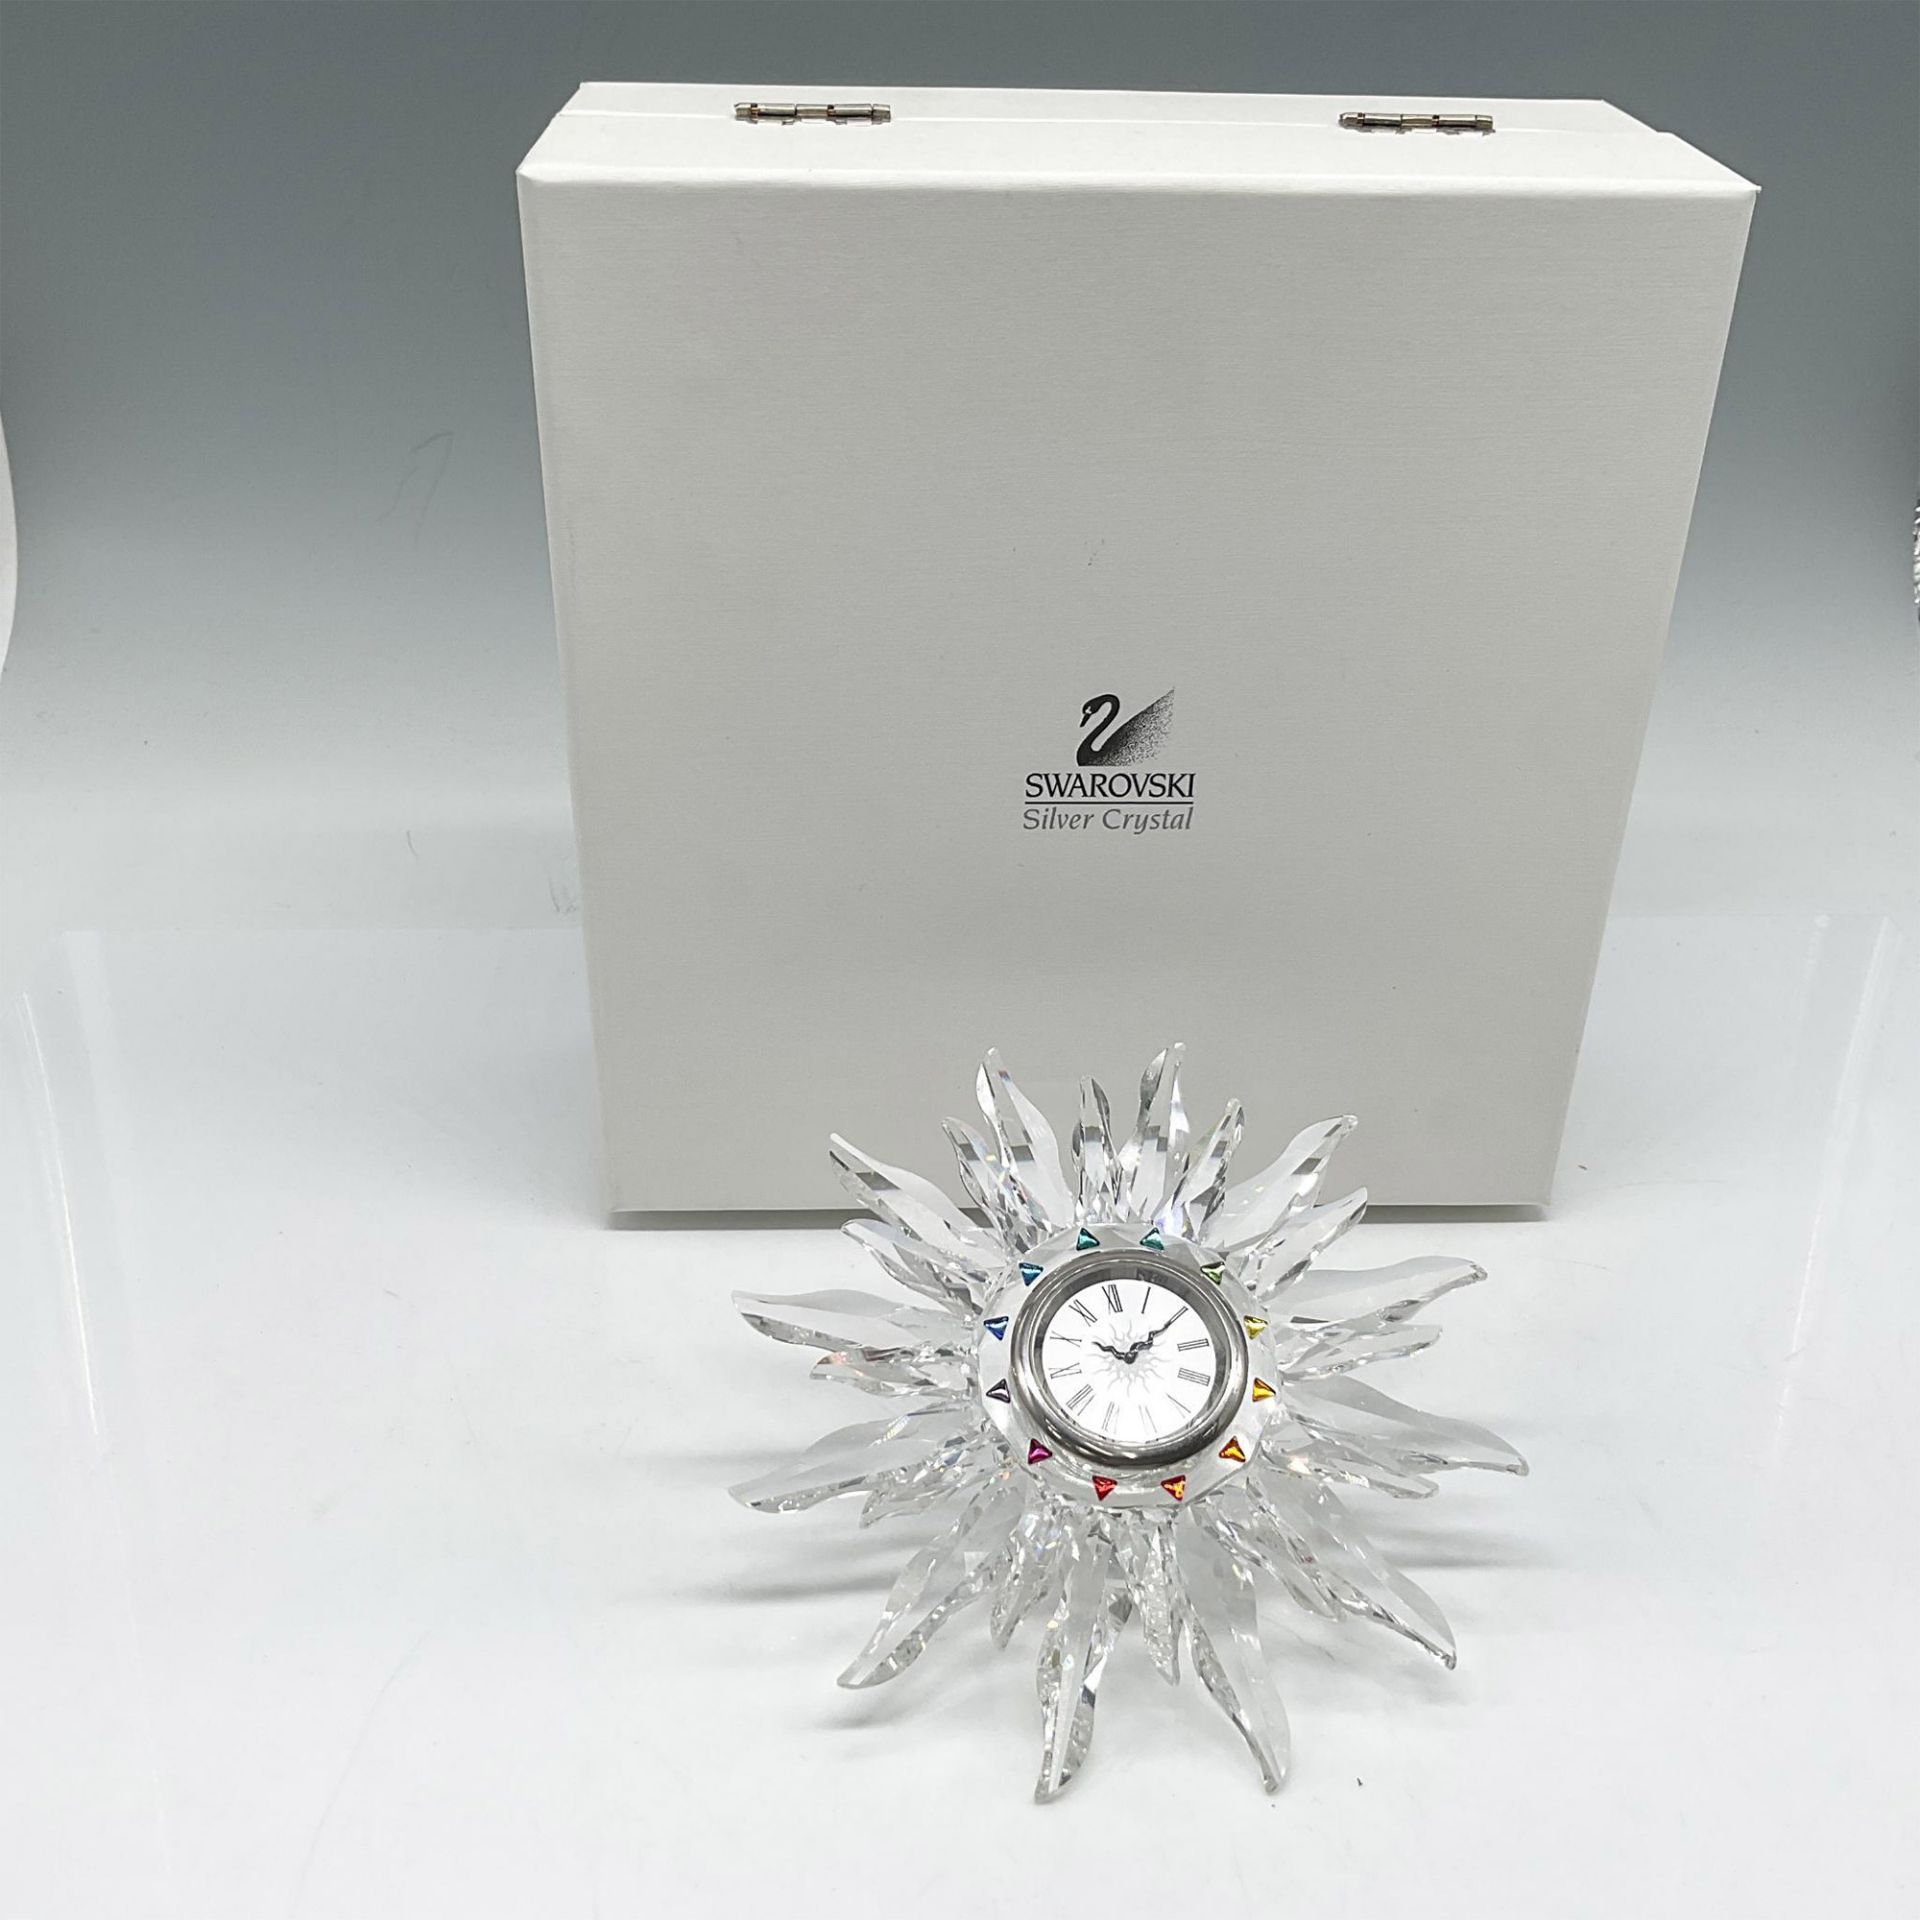 Swarovski Silver Crystal Solaris Table Clock - Image 4 of 4